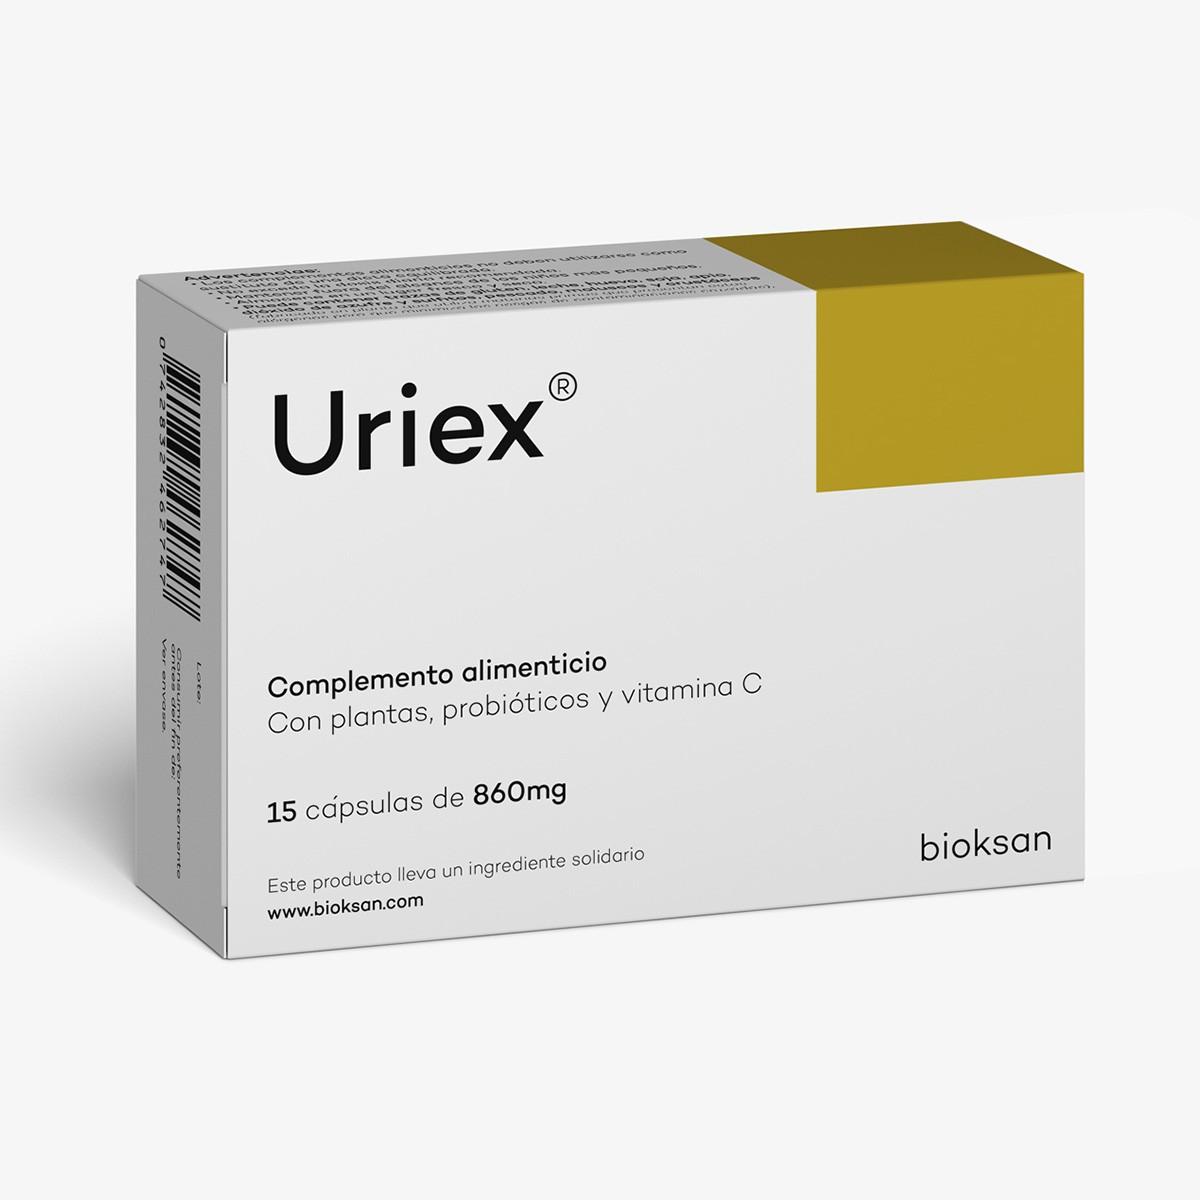 Imagen de Bioksan Uriex 15 capsulas